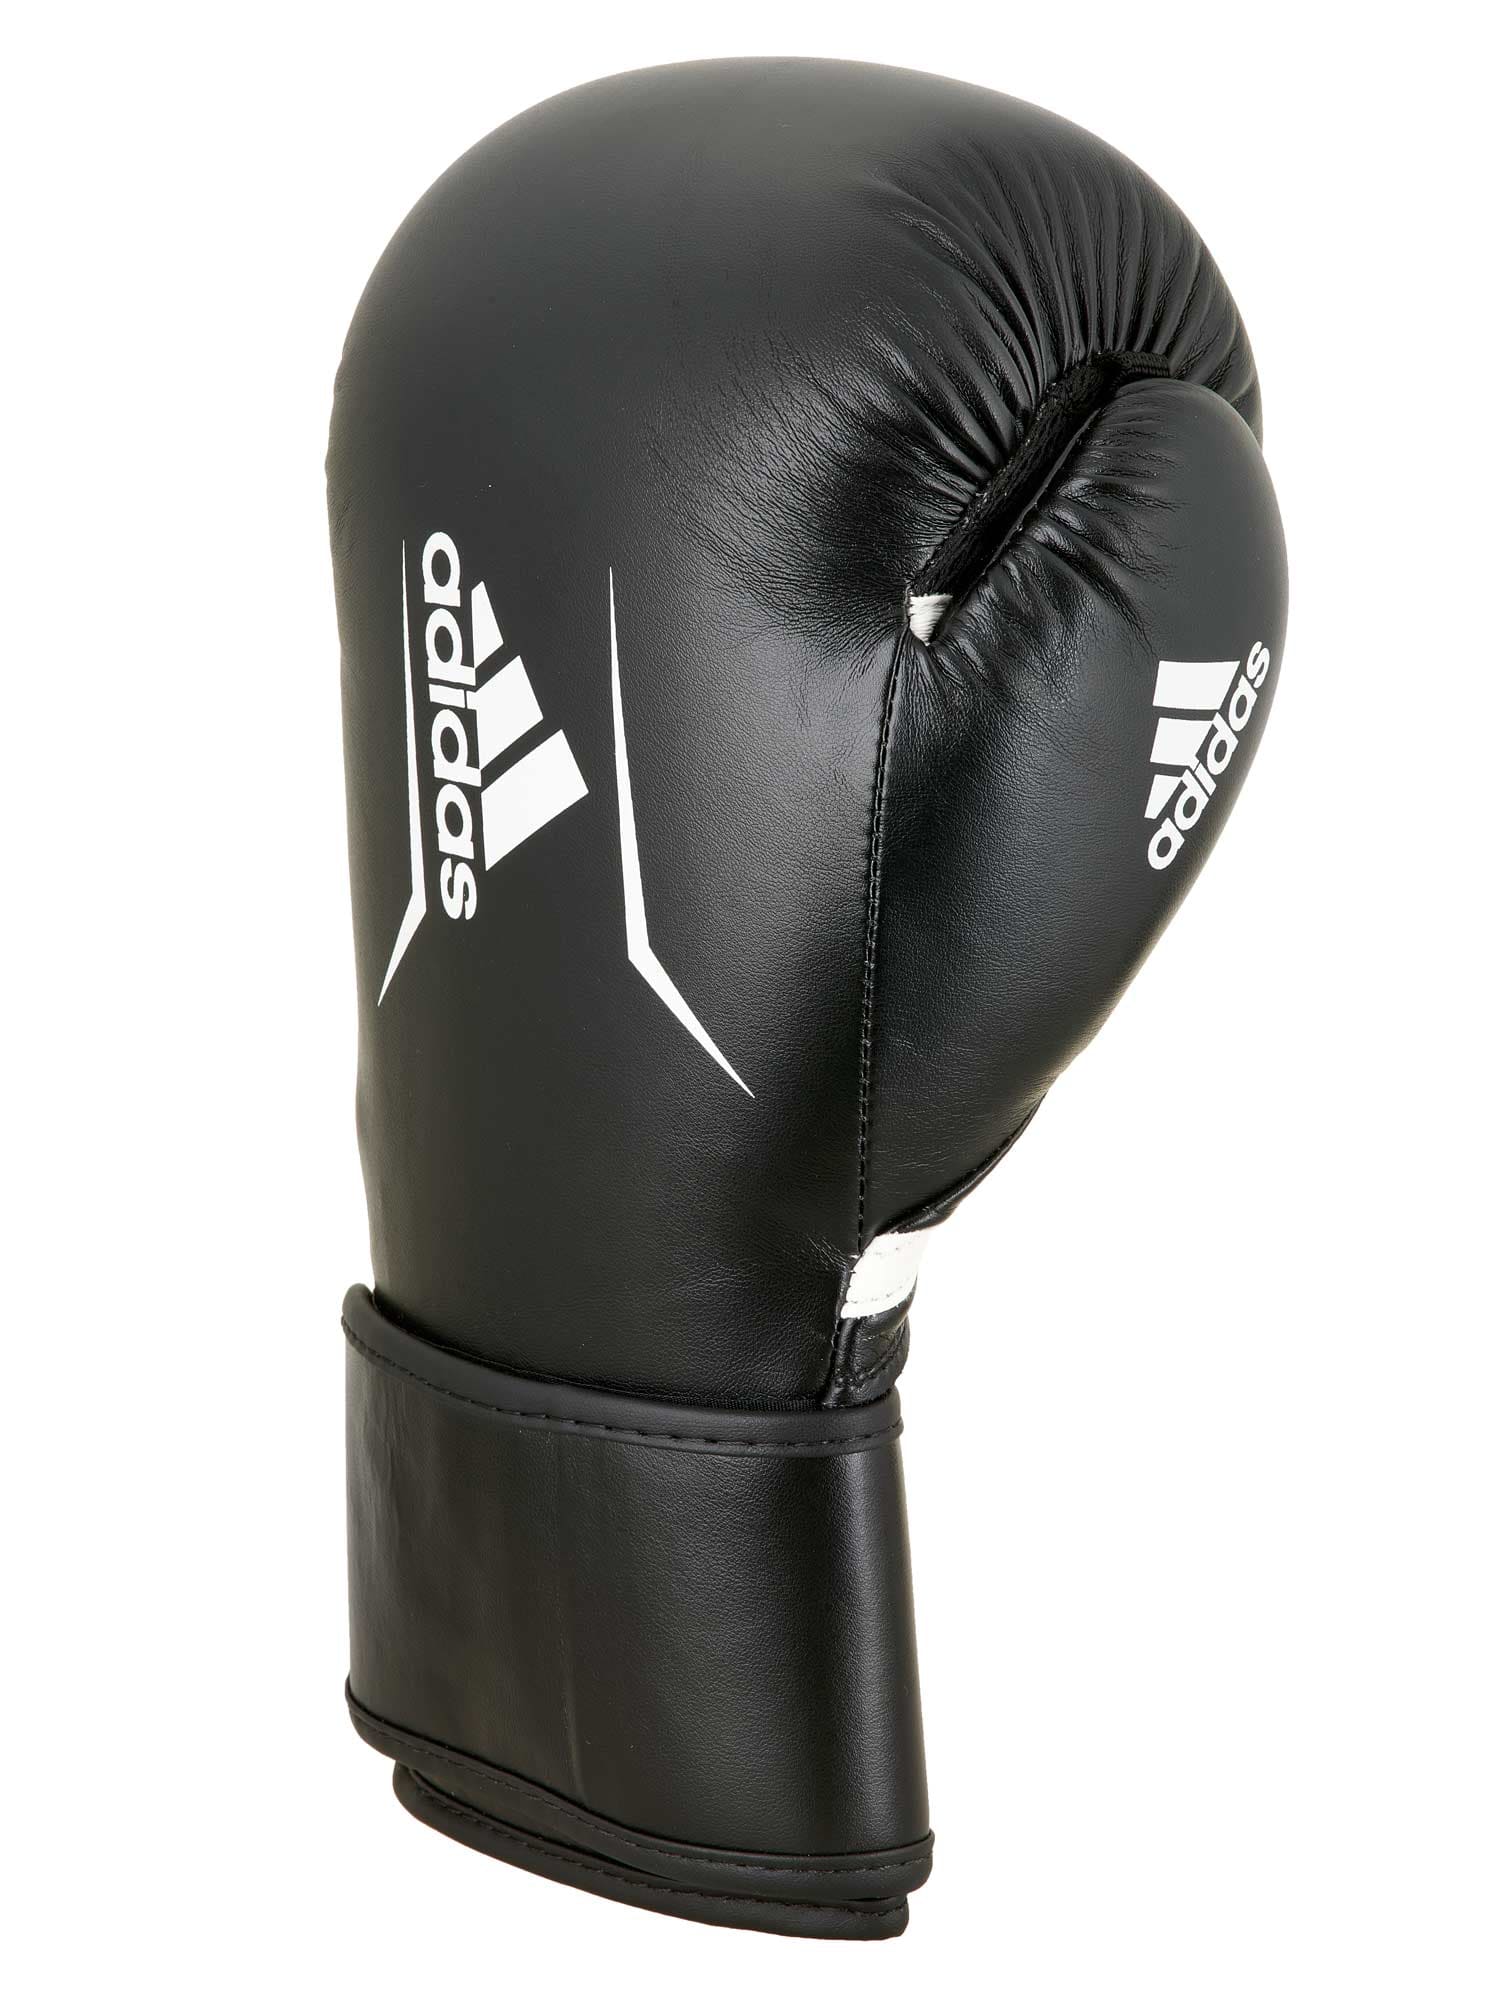 Buy ADIDAS Boxing Gloves SPEED 100 Black/White Online ✓ - emparor Fight Shop